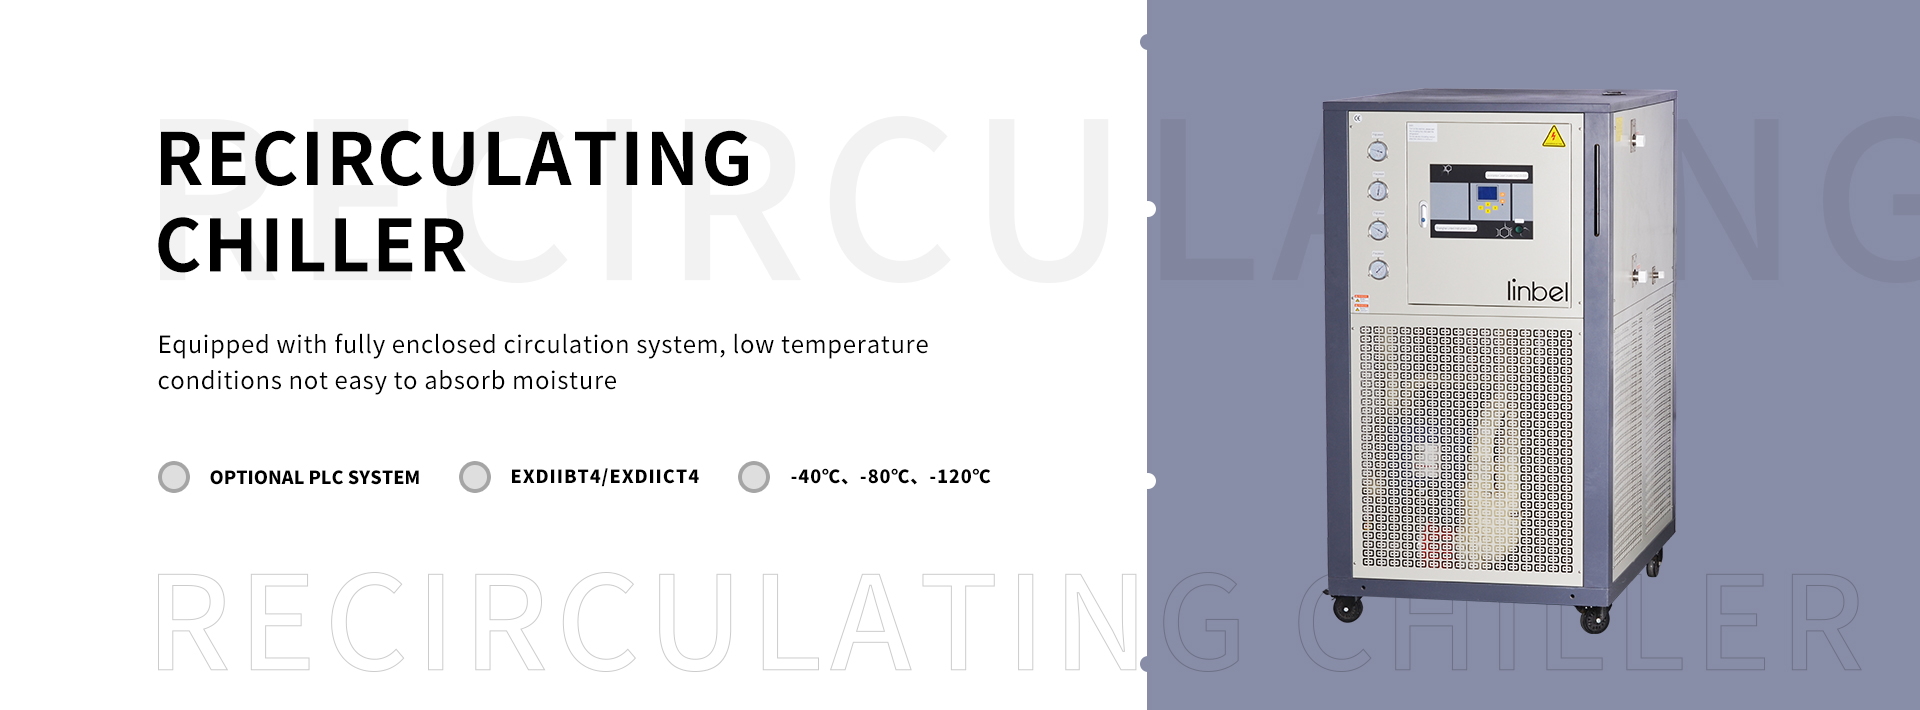 recirculating chiller